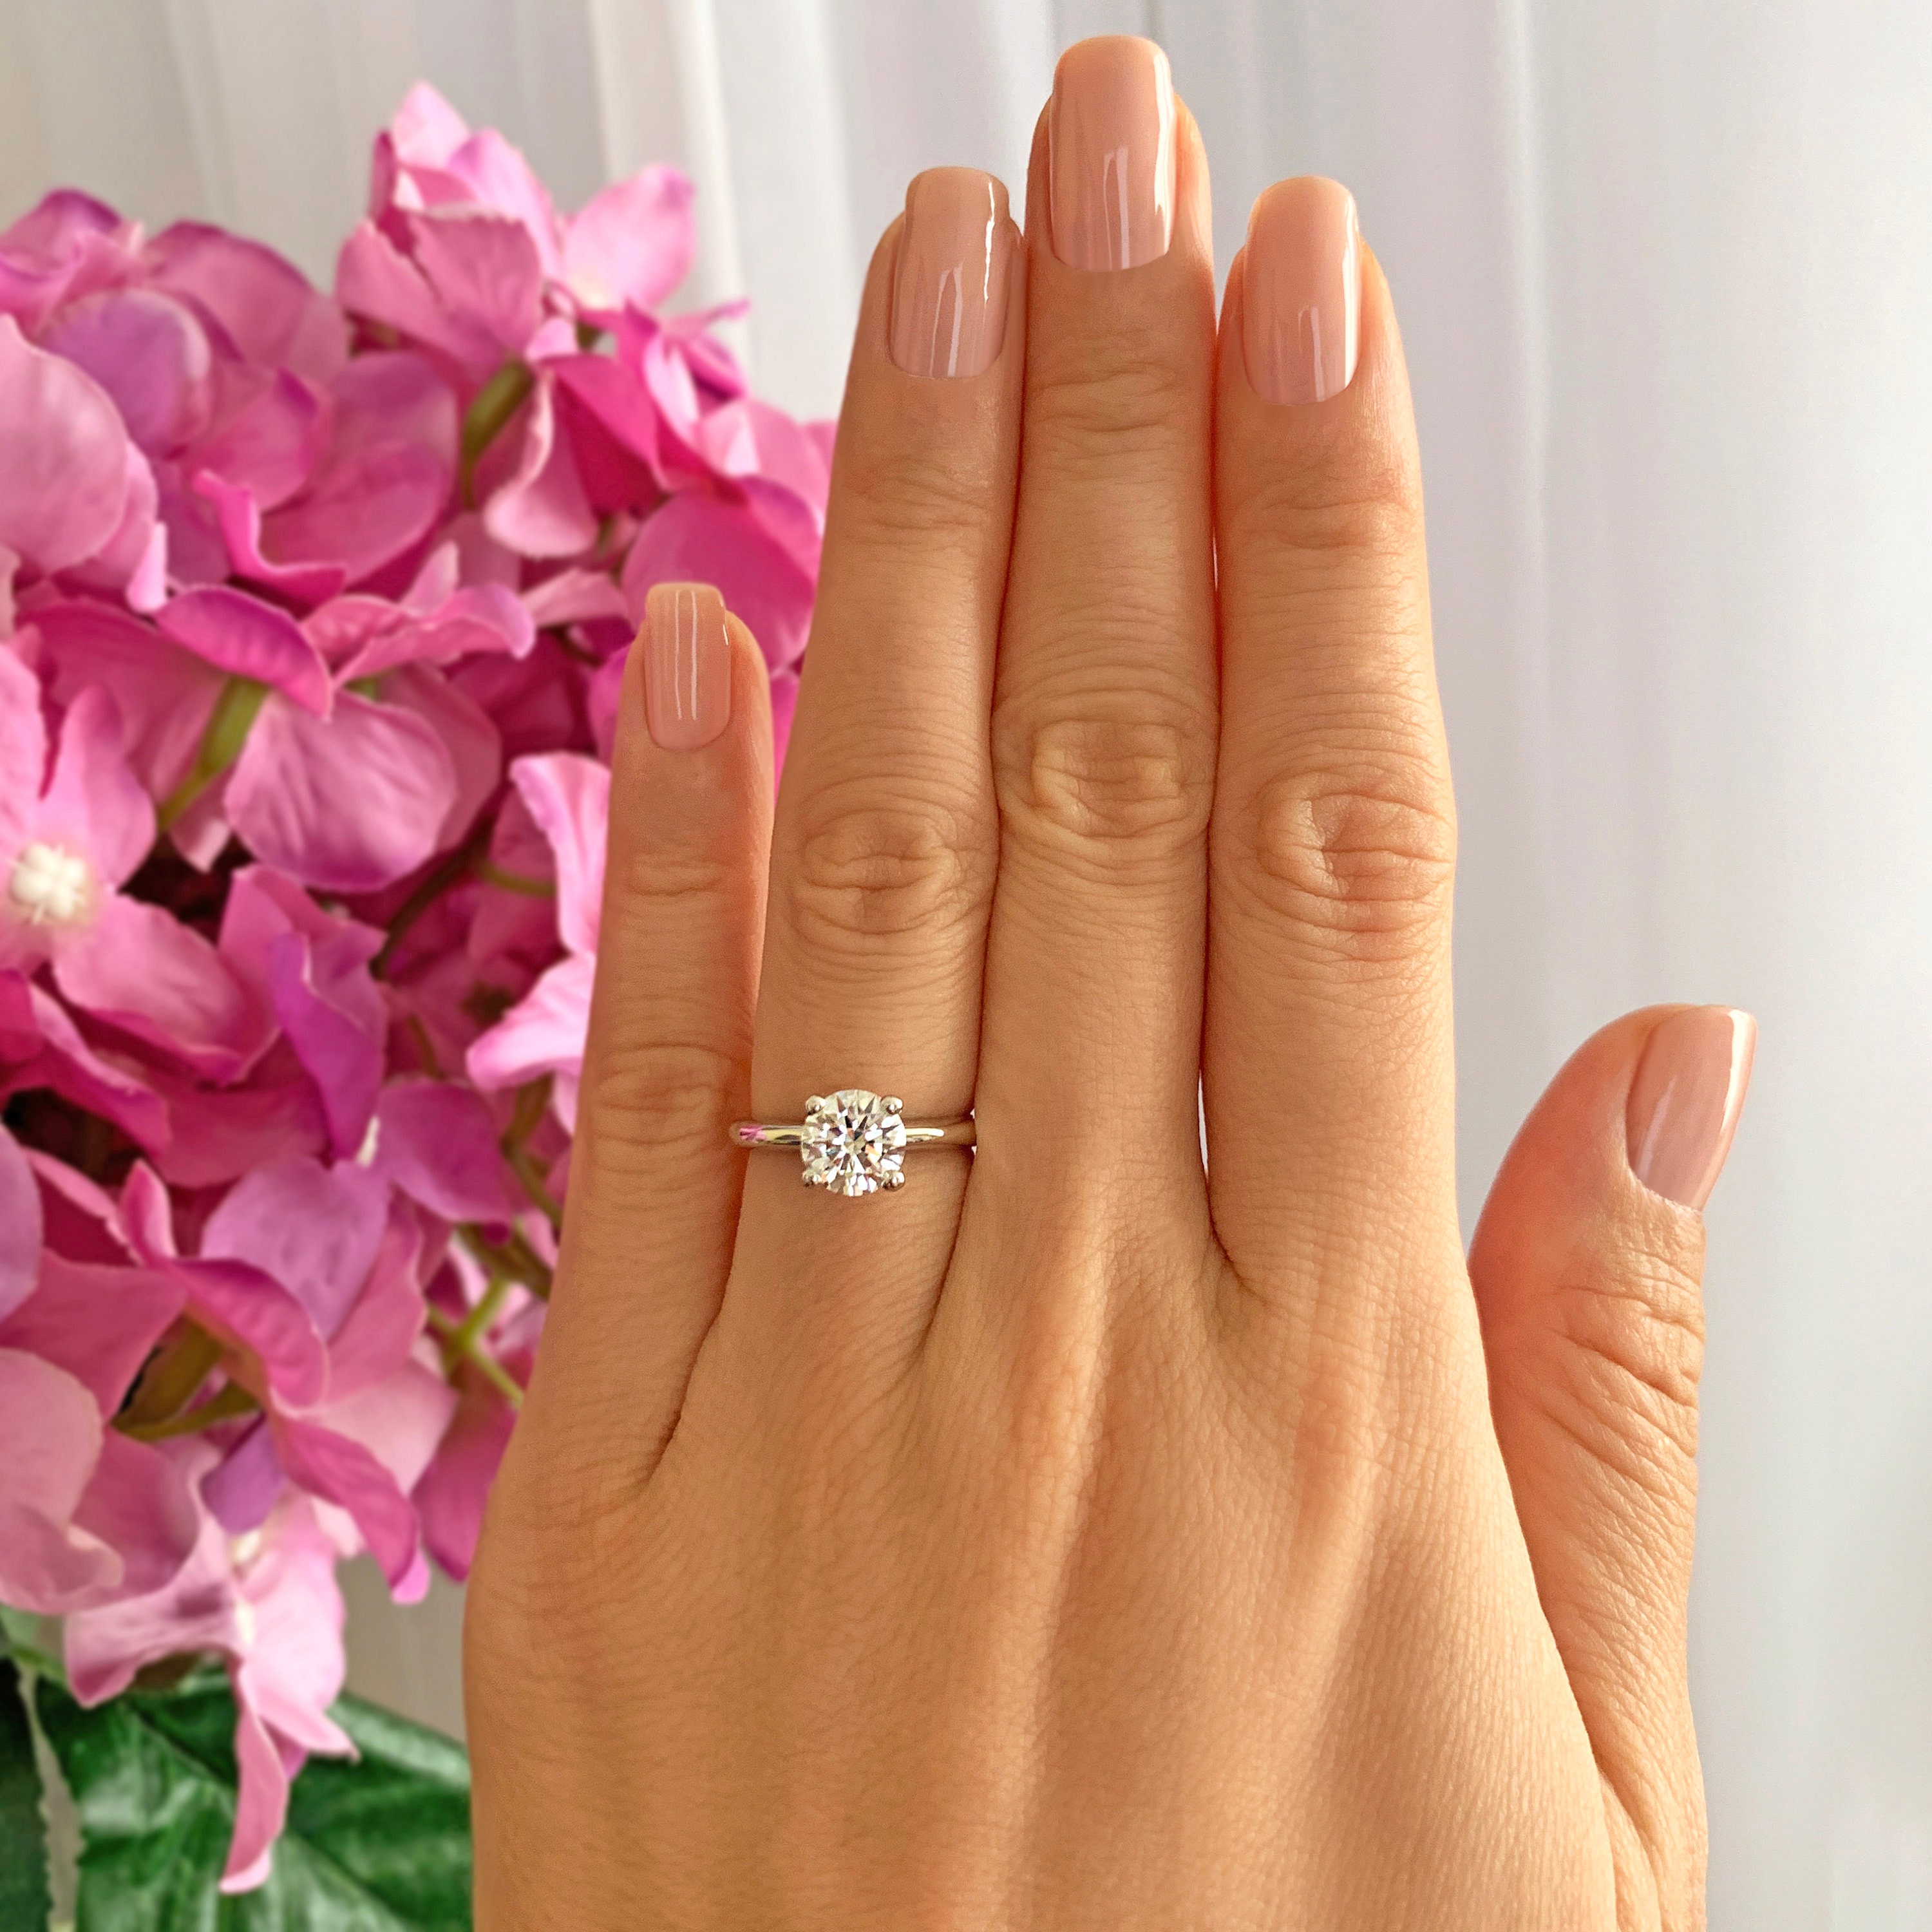 How to Buy a 1.5 Carat Diamond Ring | Ritani